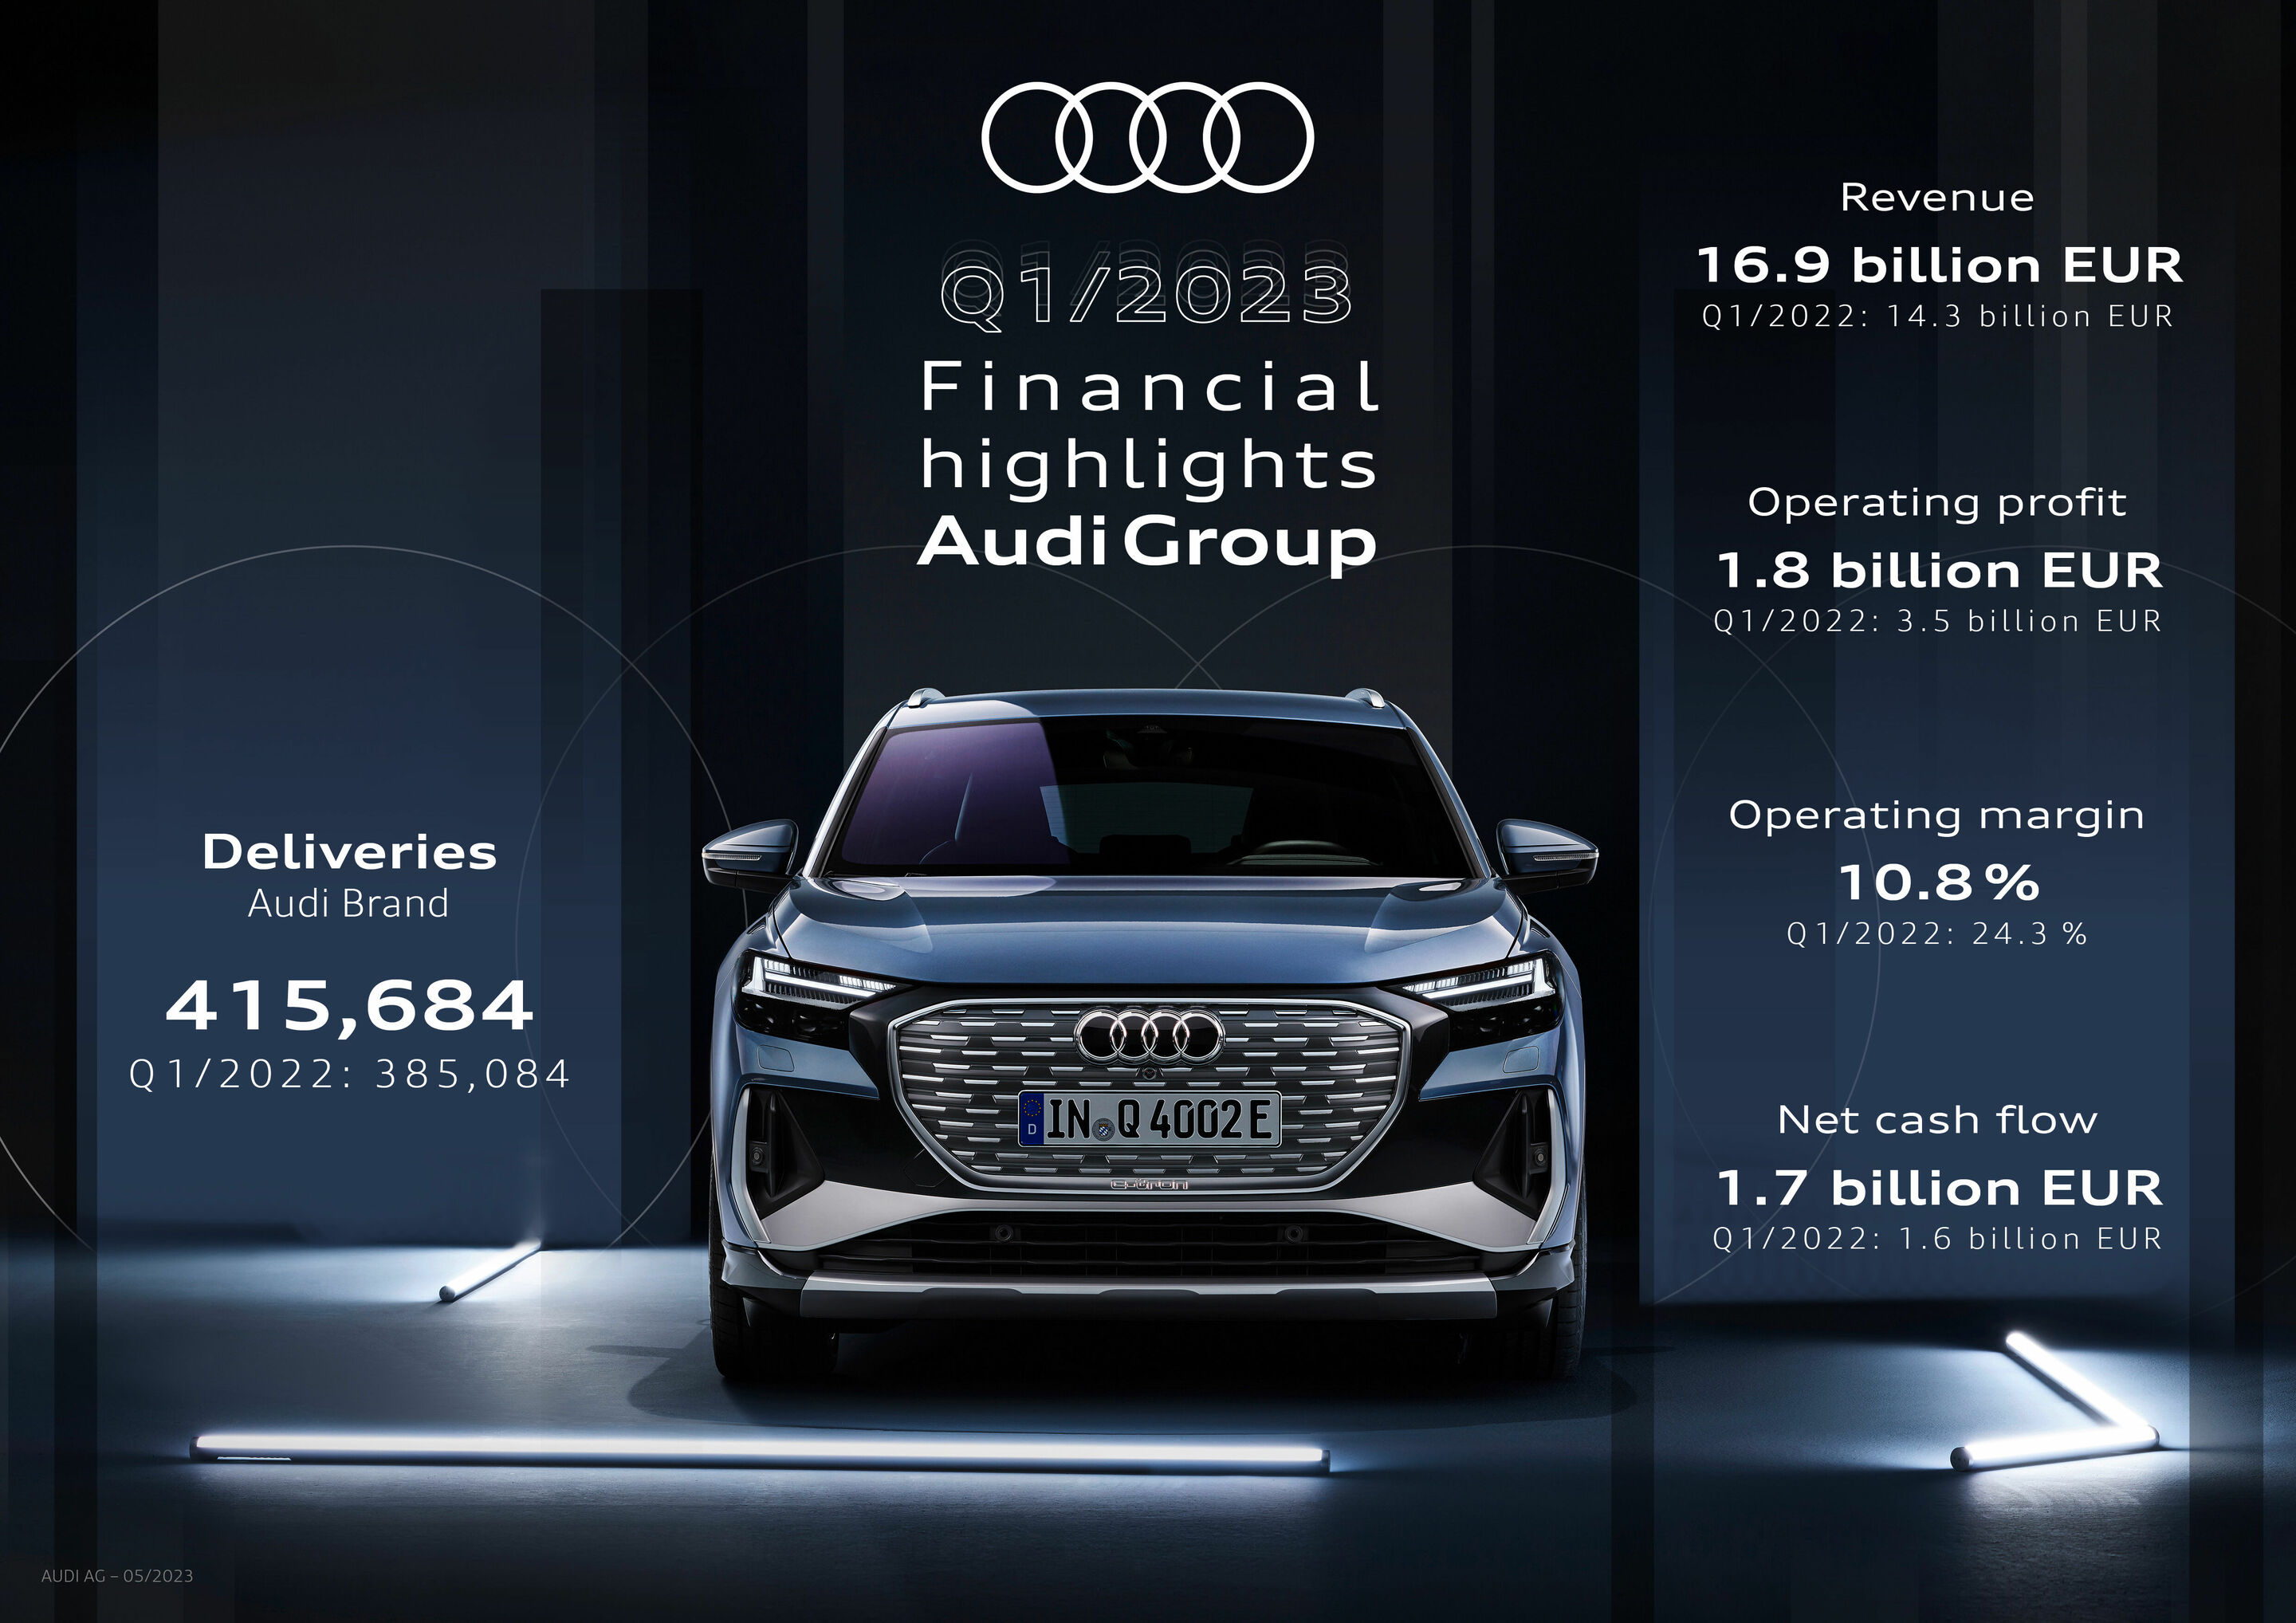 Q1/2023 Financial highlights Audi Group